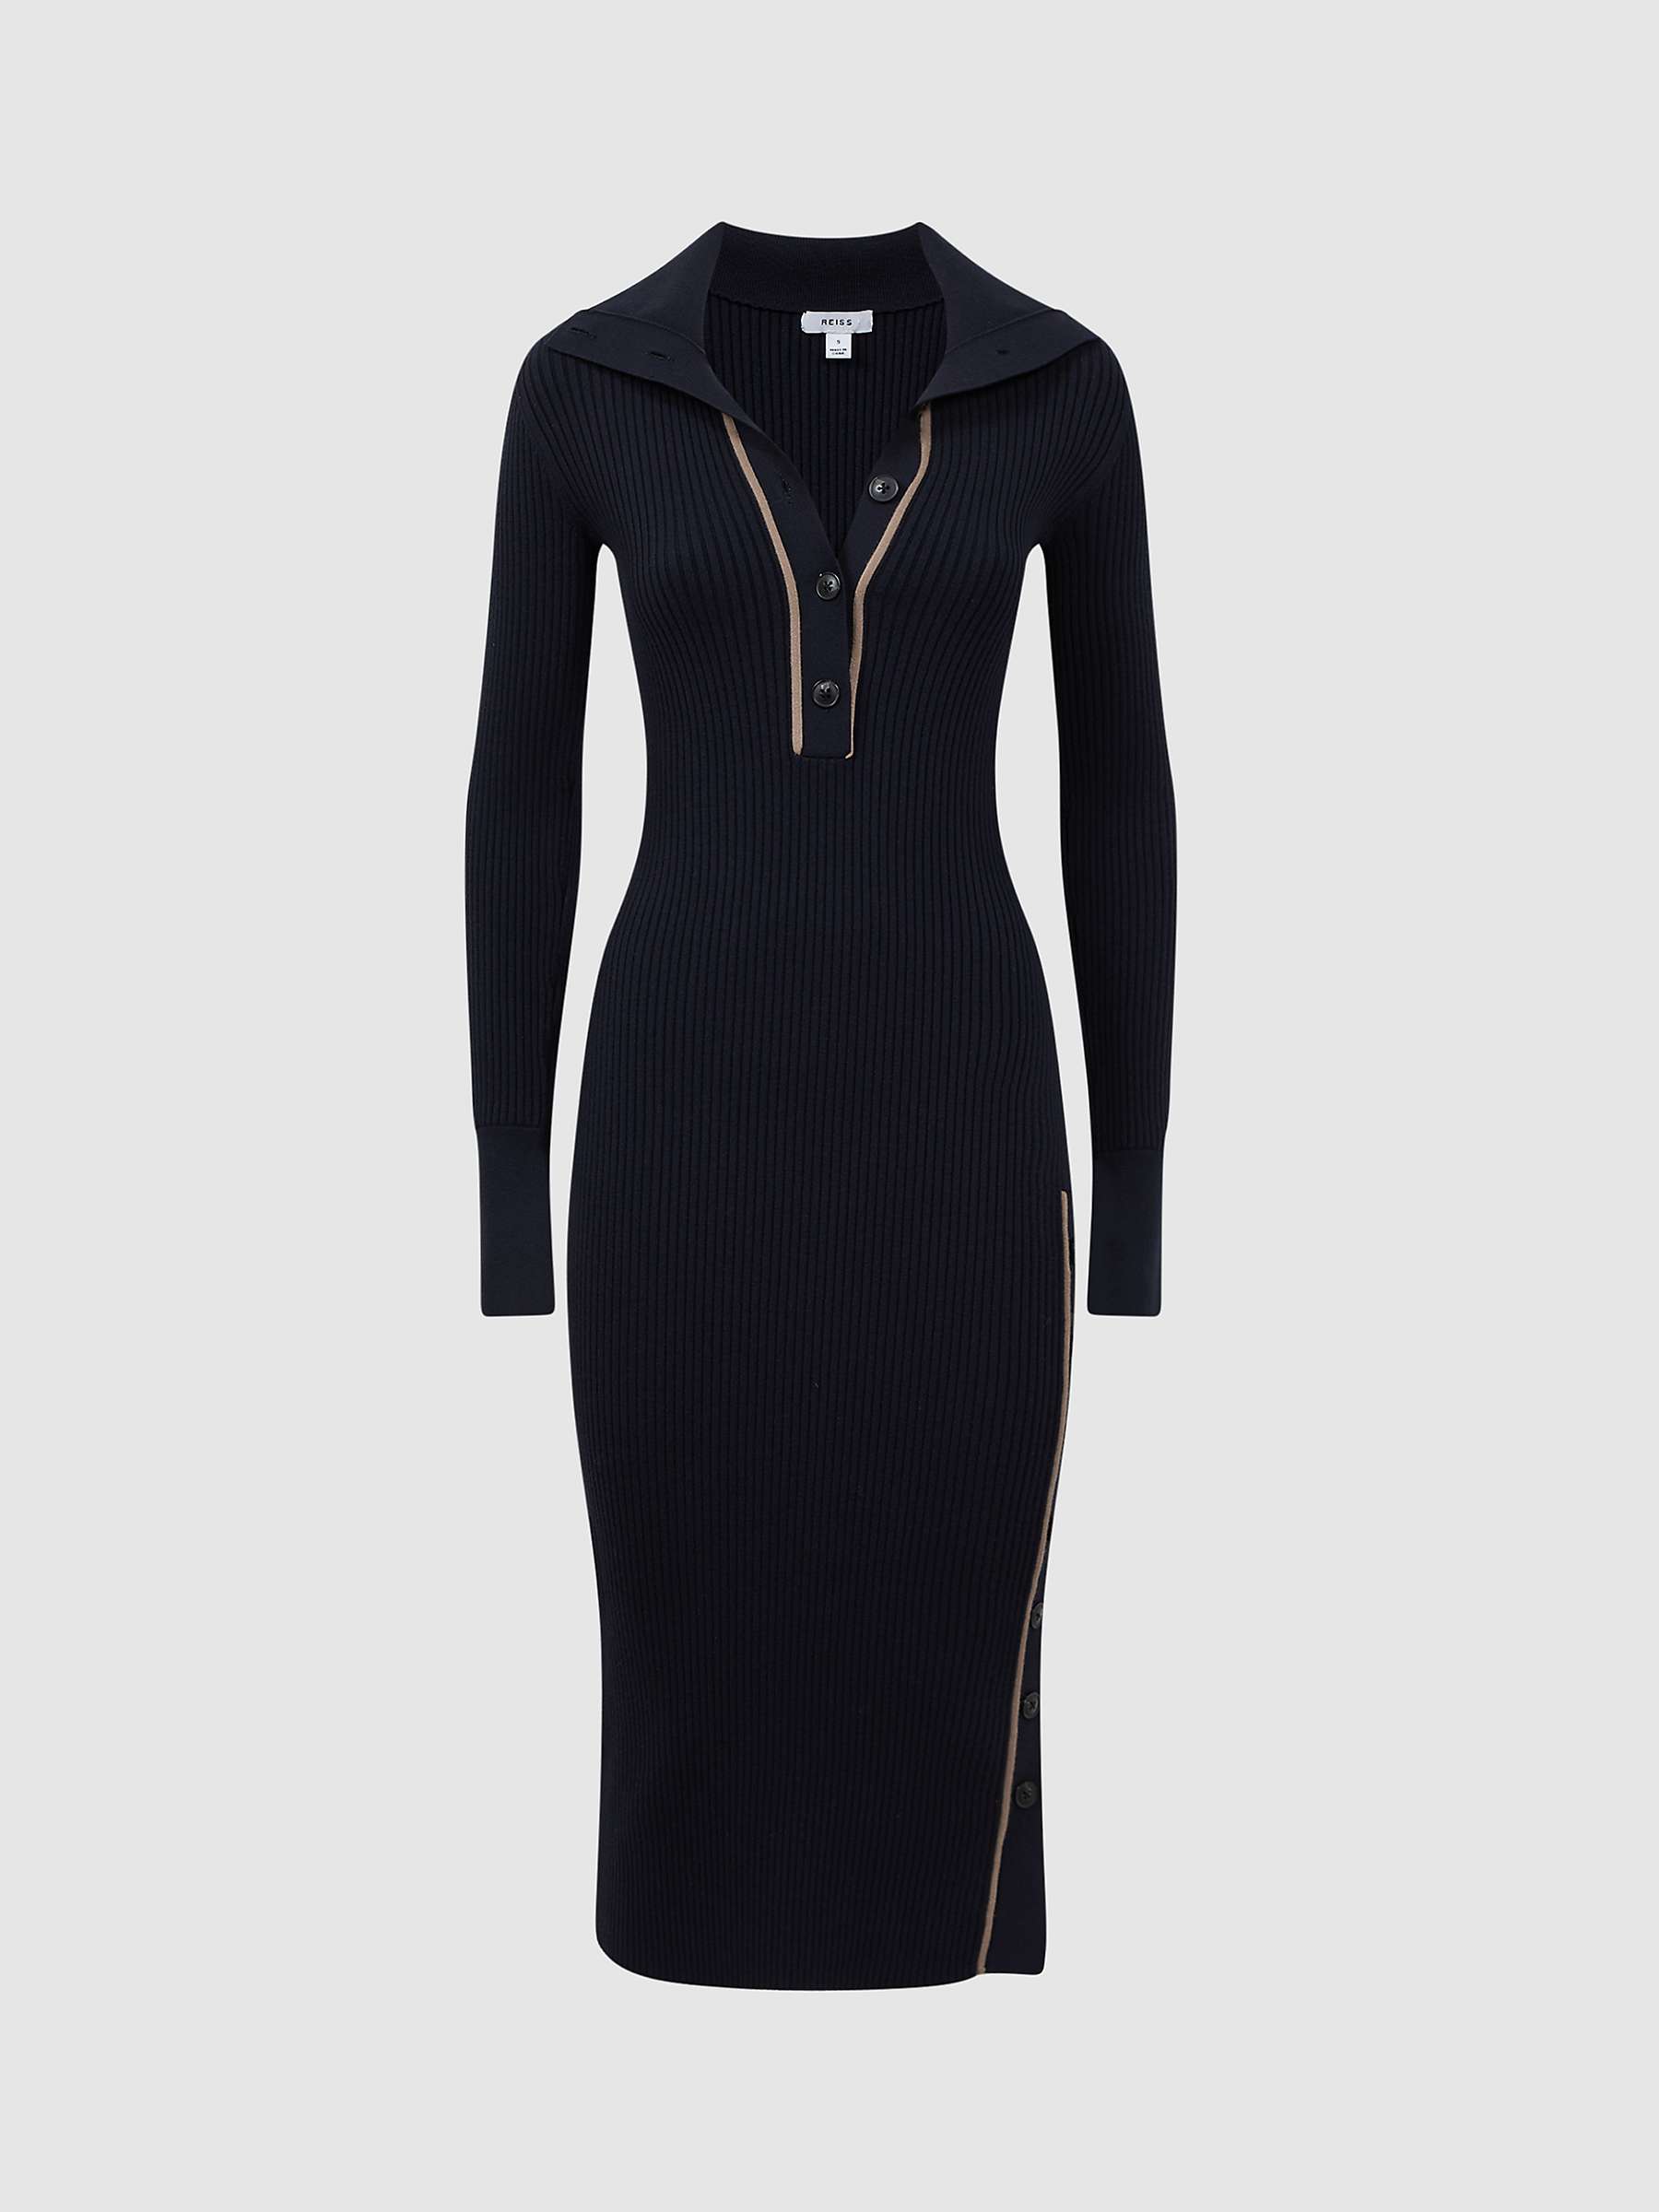 Buy Reiss Michelle Block Knitted Dress, Navy Online at johnlewis.com